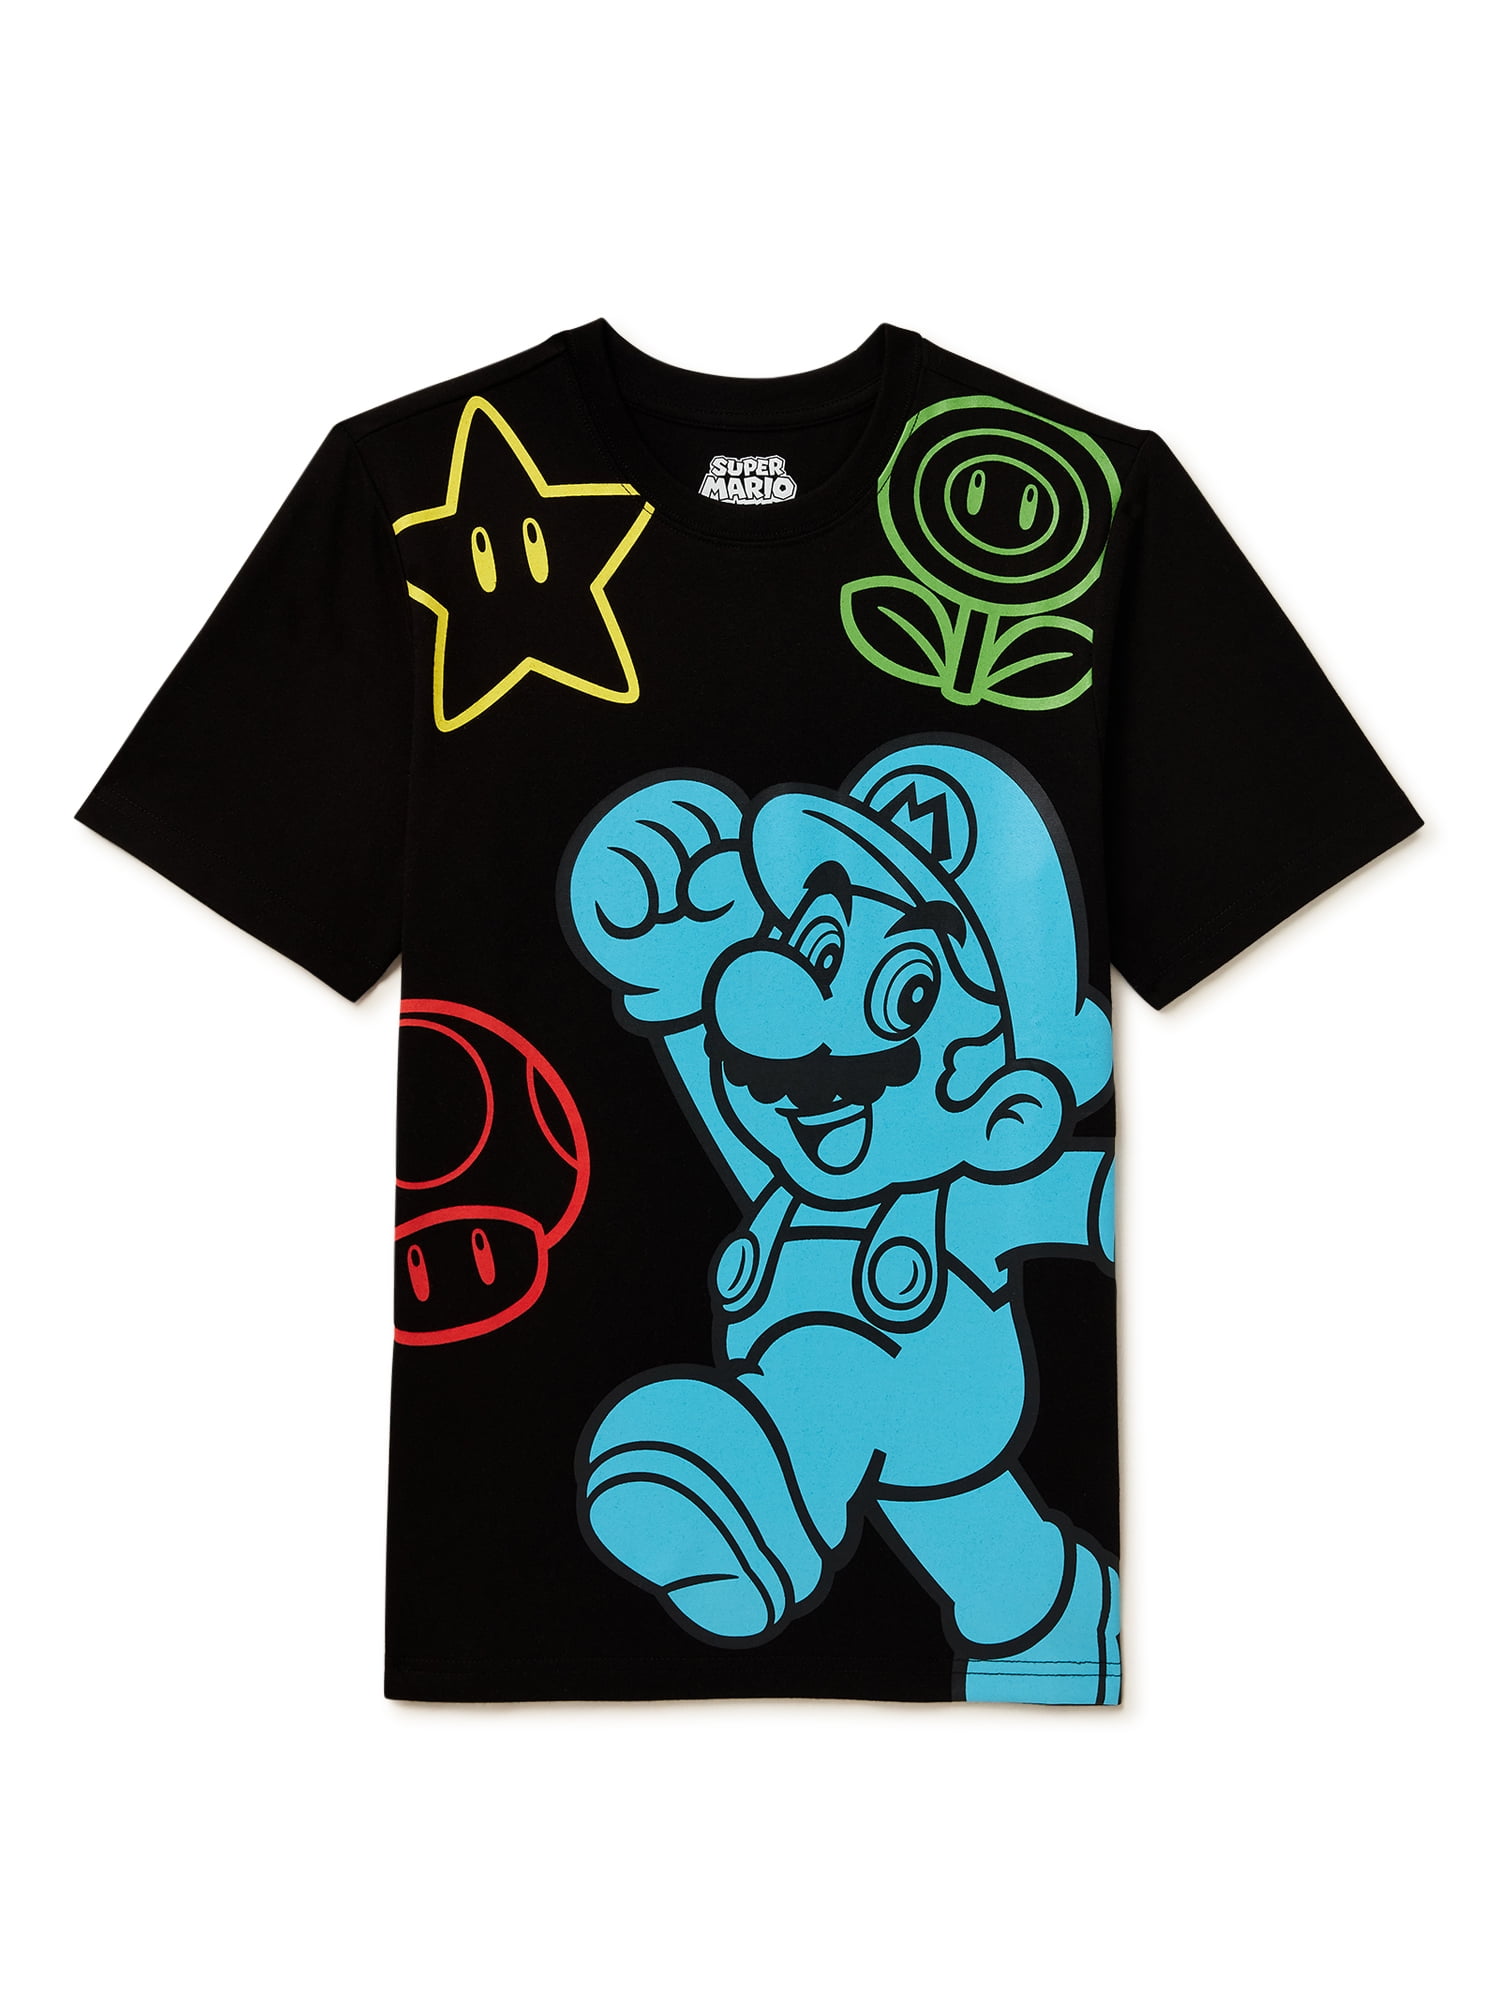 Super Mario Boys Graphic T-Shirt, Sizes 4-18 - Walmart.com